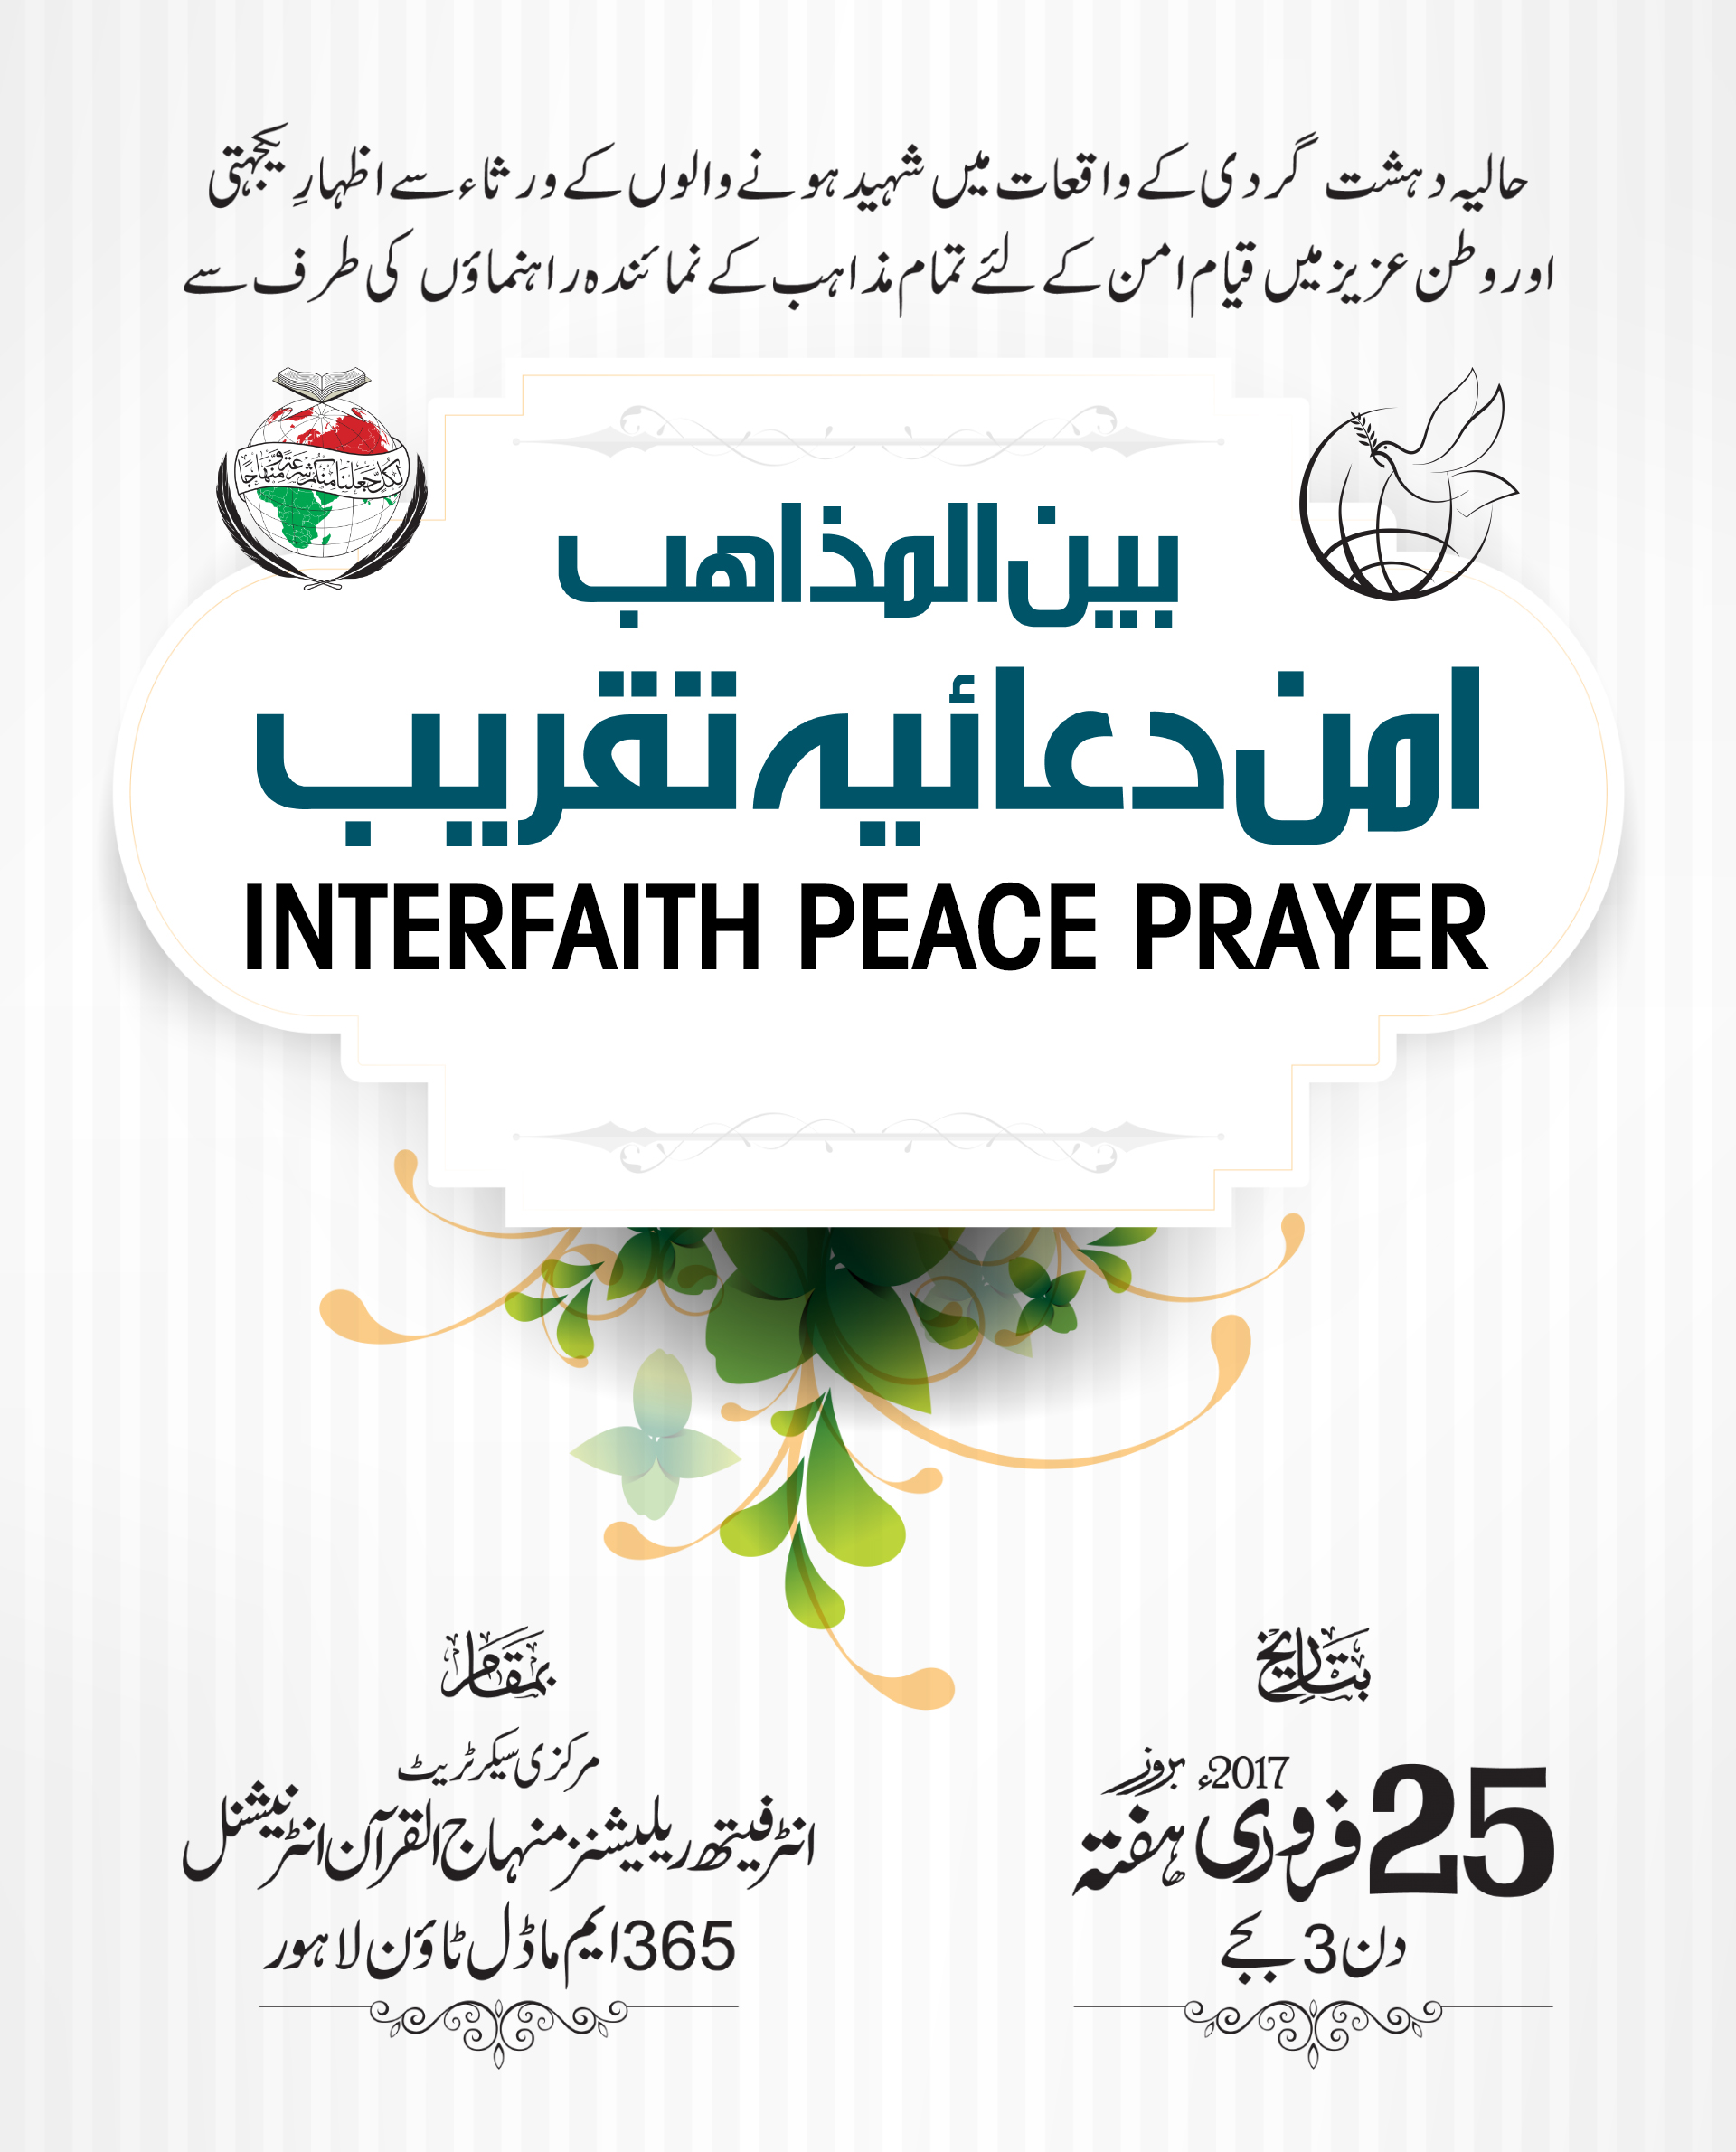 MQI Interfaith Relations to hold 'Interfaith Peace Prayer' on 25th Feb, 2017